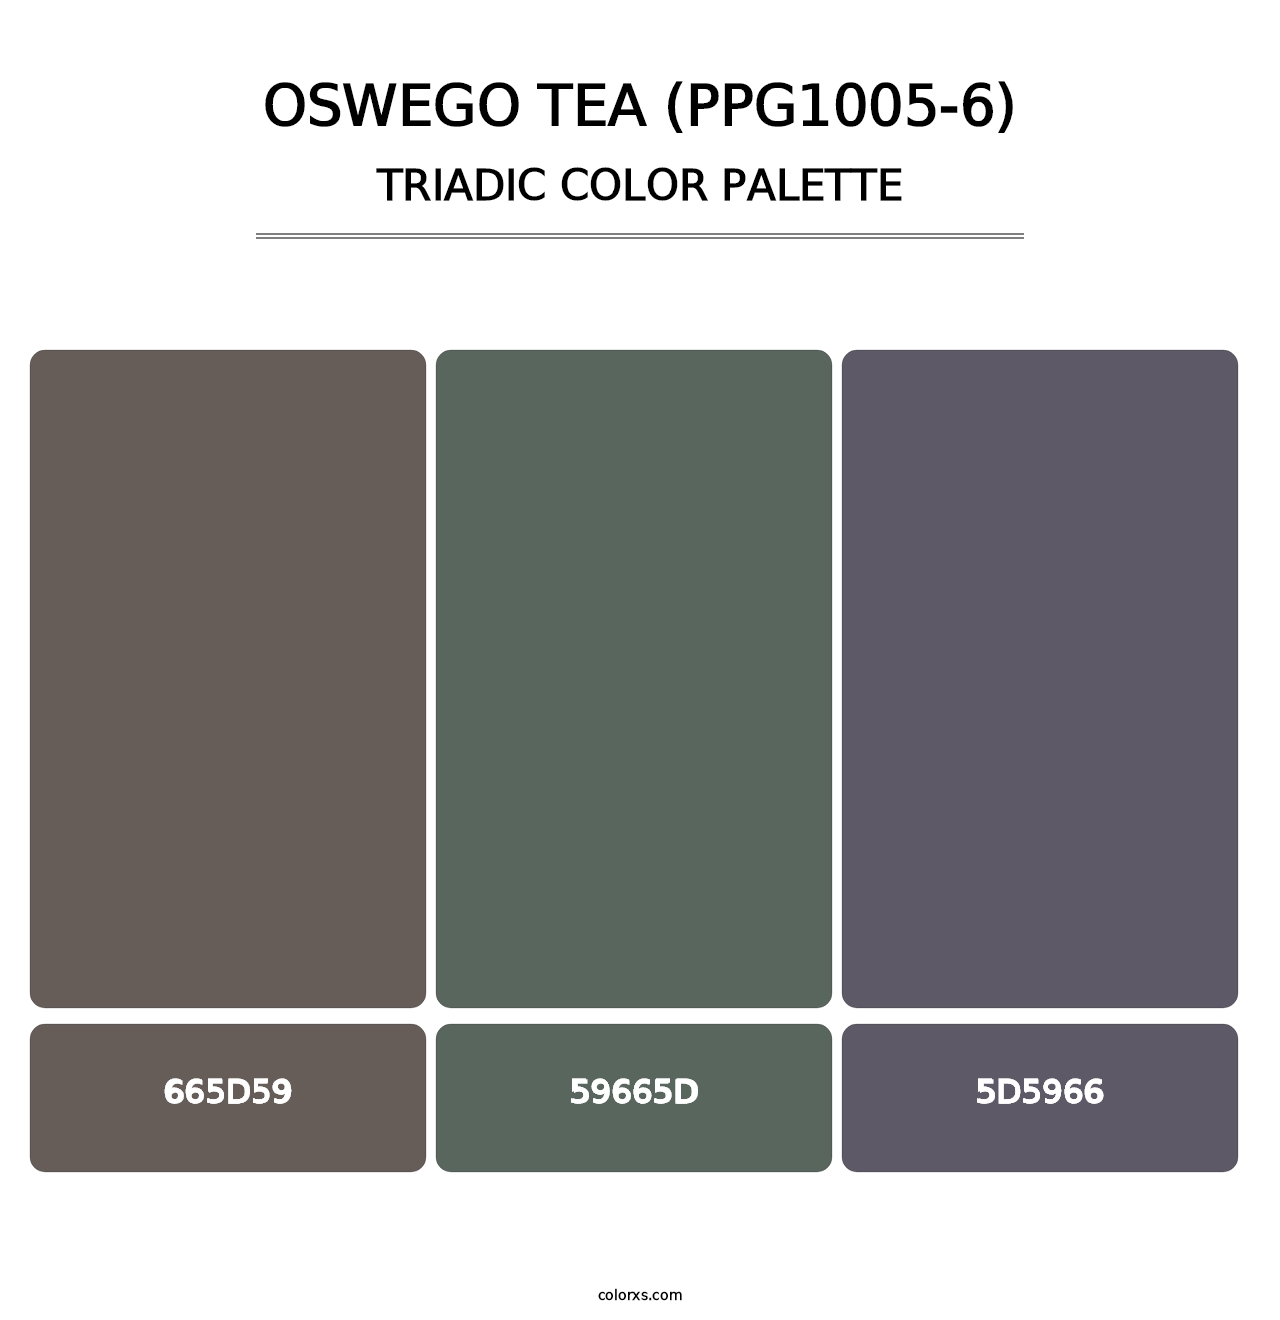 Oswego Tea (PPG1005-6) - Triadic Color Palette